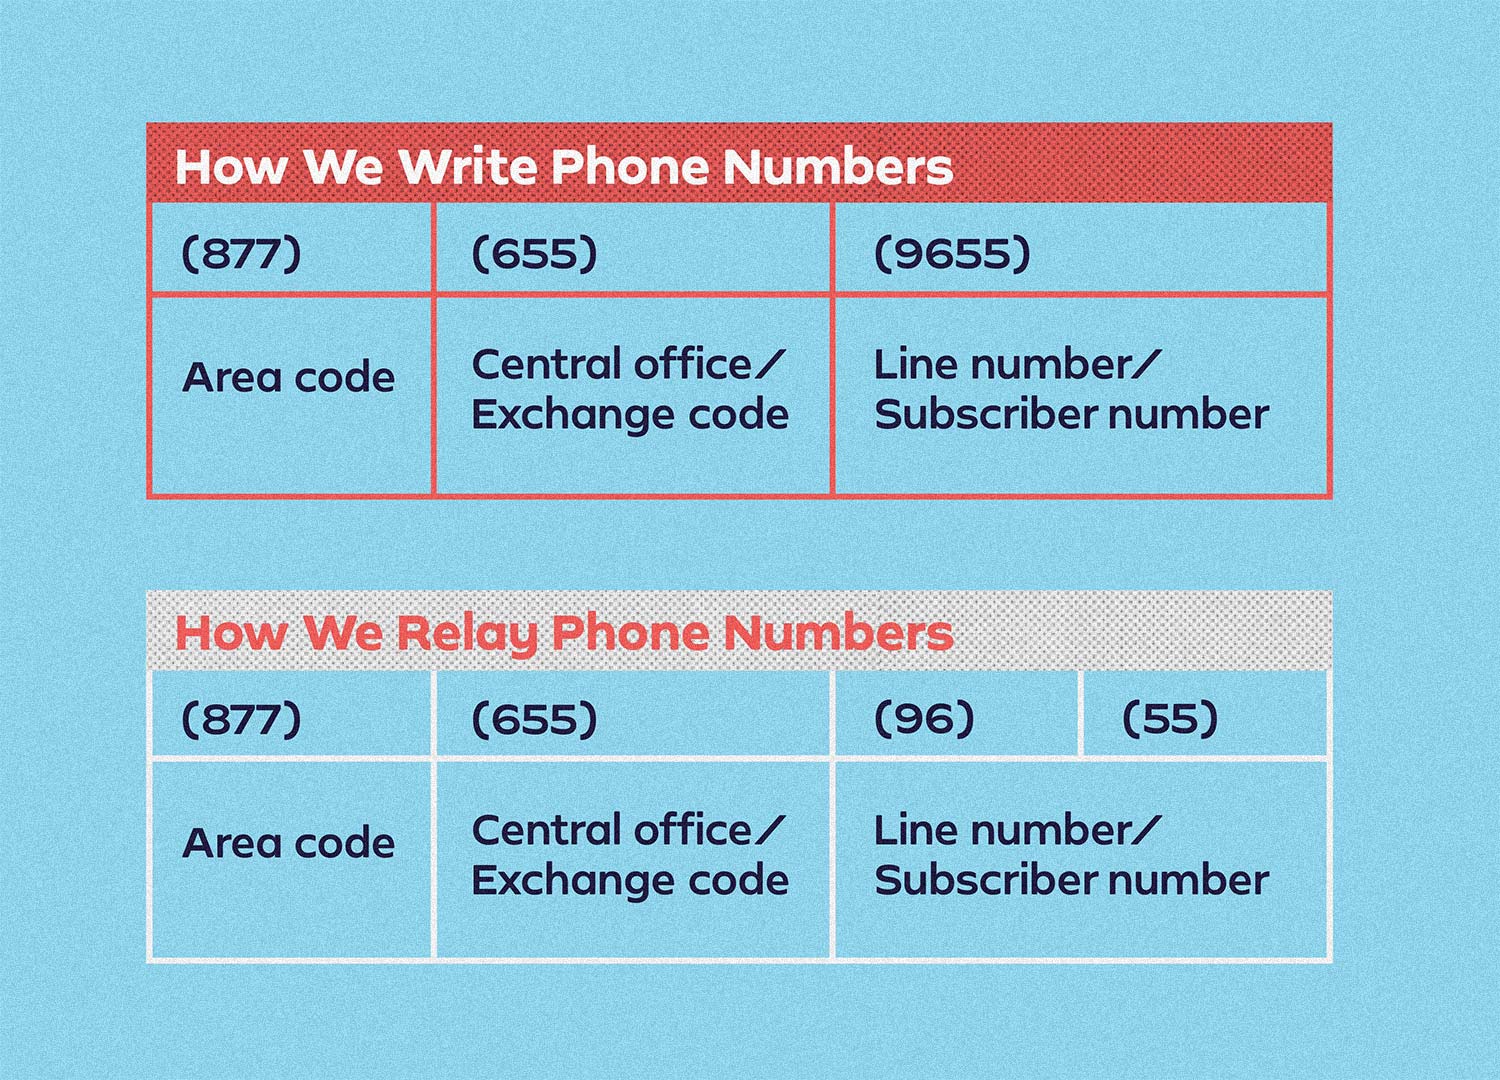 How we write phone numbers vs. How we relay phone numbers.